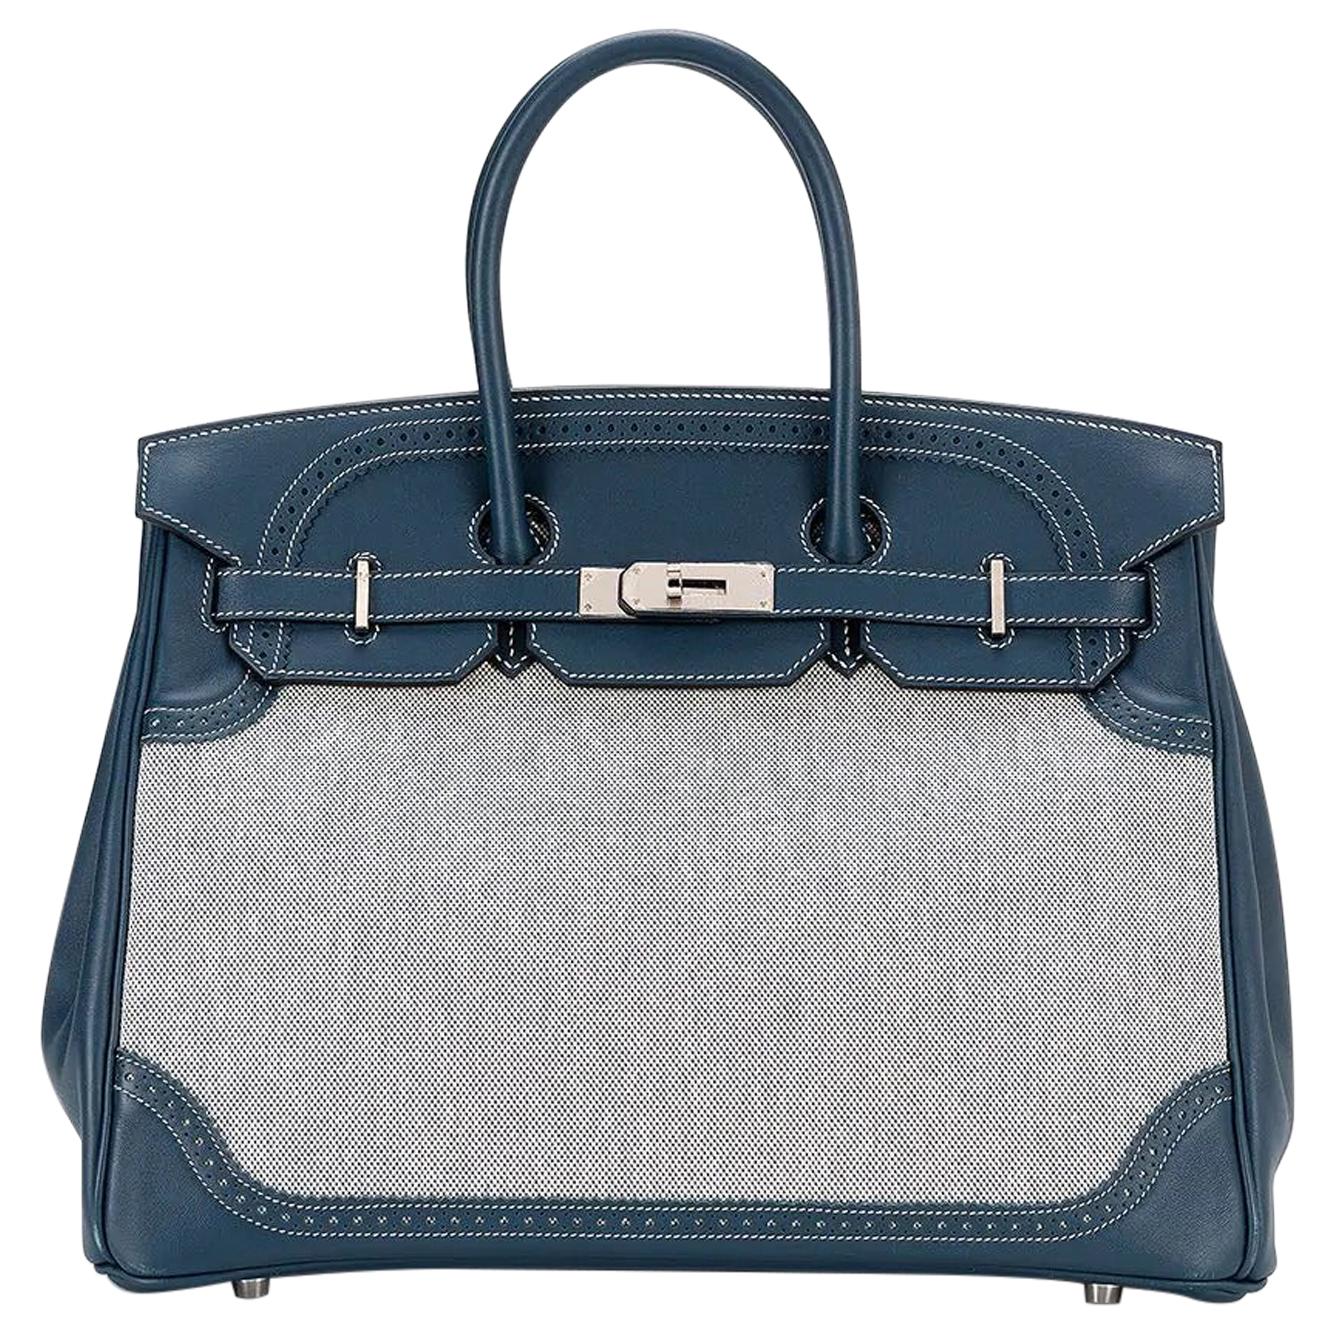 Hermès Limited Edition Bleu de Prusse Swift 35 Birkin Tasche